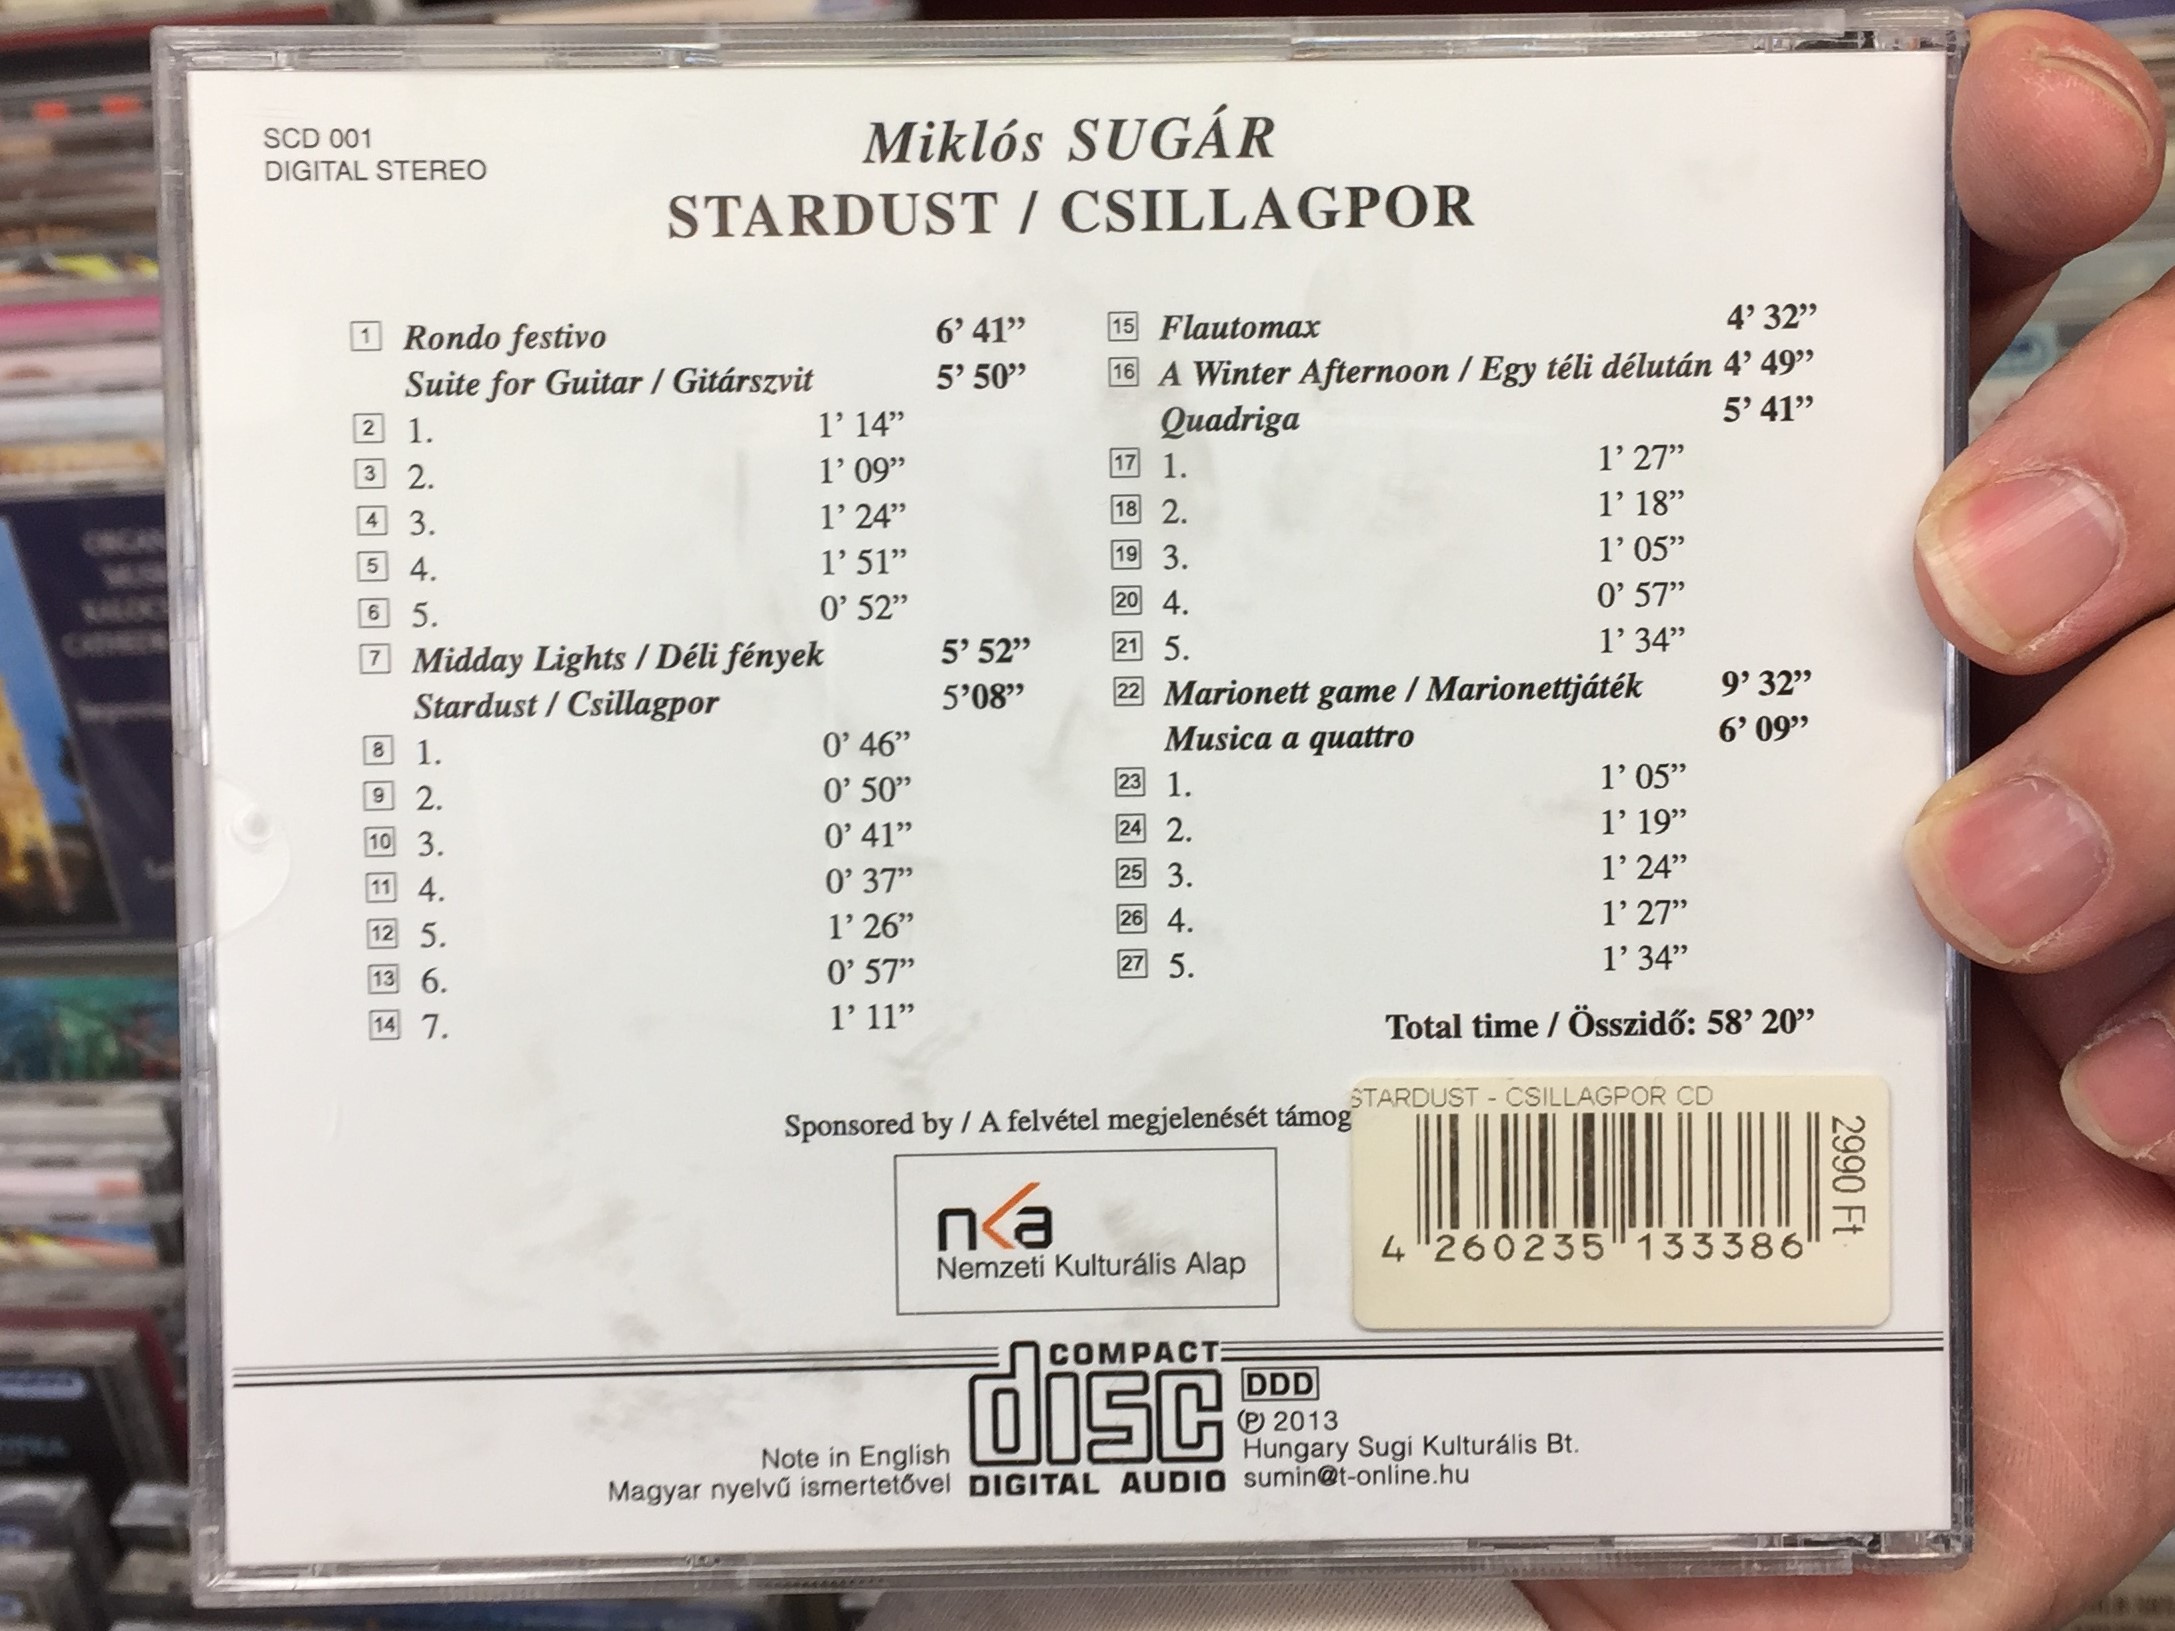 miklos-sugar-stardust-csillagpor-hungary-sugi-kulturalis-bt.-audio-cd-2013-stereo-scd-001-2-.jpg